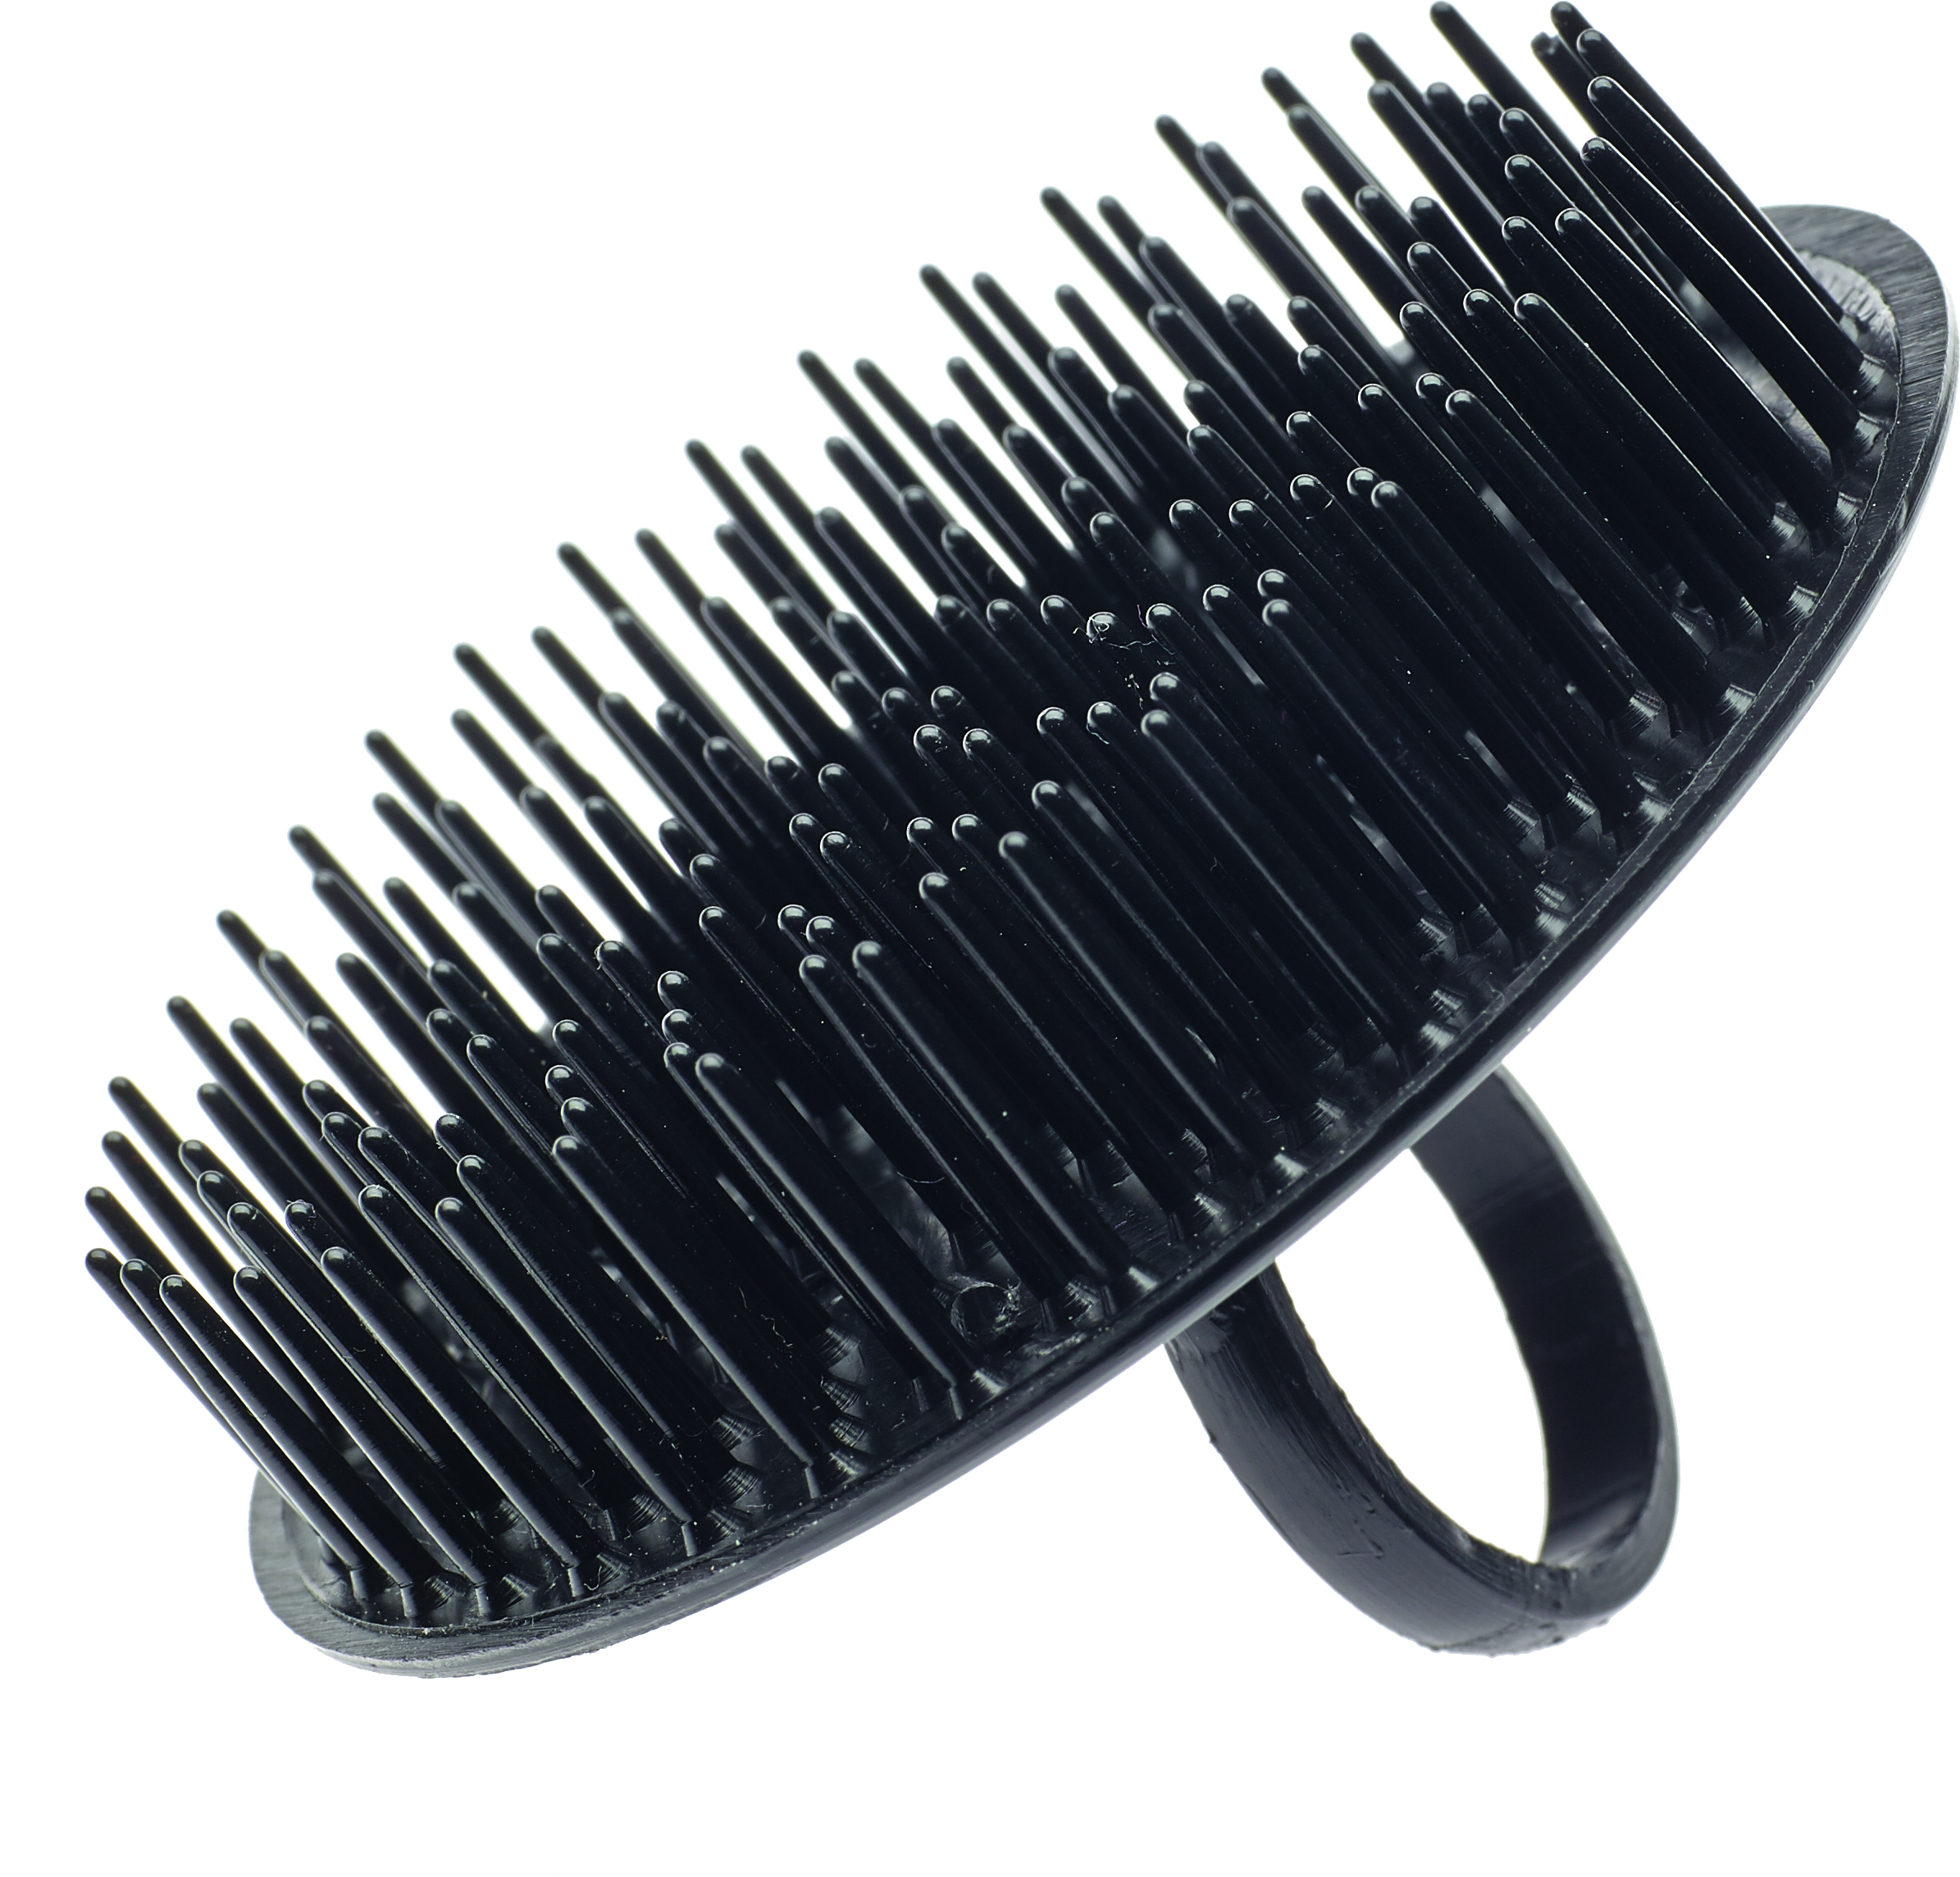 Scalp massage / shampoo brush